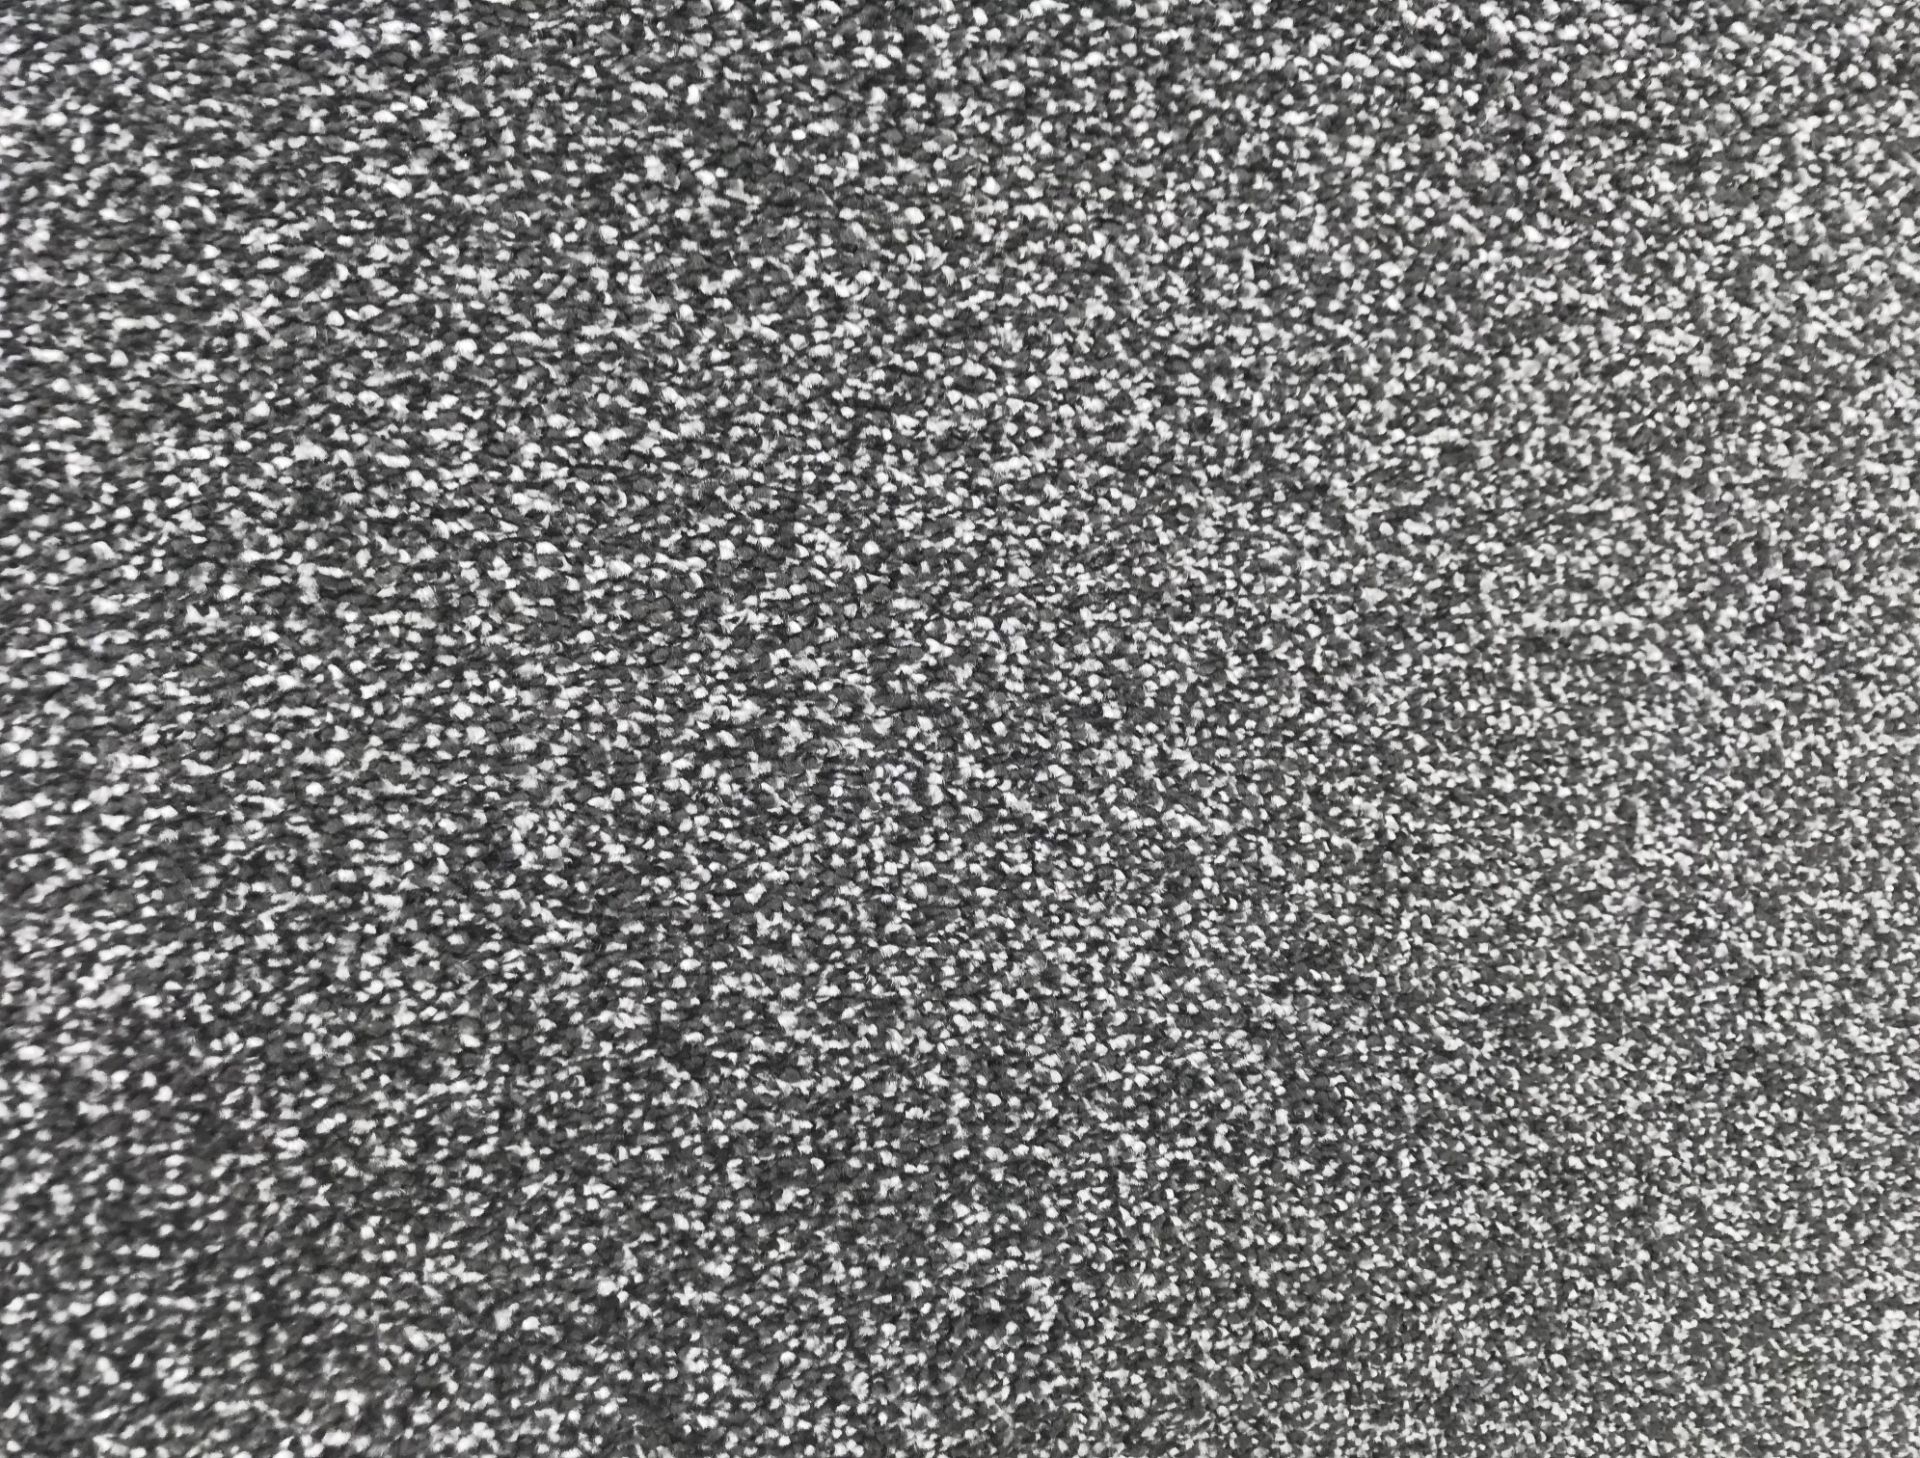 1 x Luxury 50Oz Twist Pile Carpet - Colour Platinum Grey - 25X4 Meter Roll - Rrp £36.99/Sqm - Ref: - Image 3 of 5